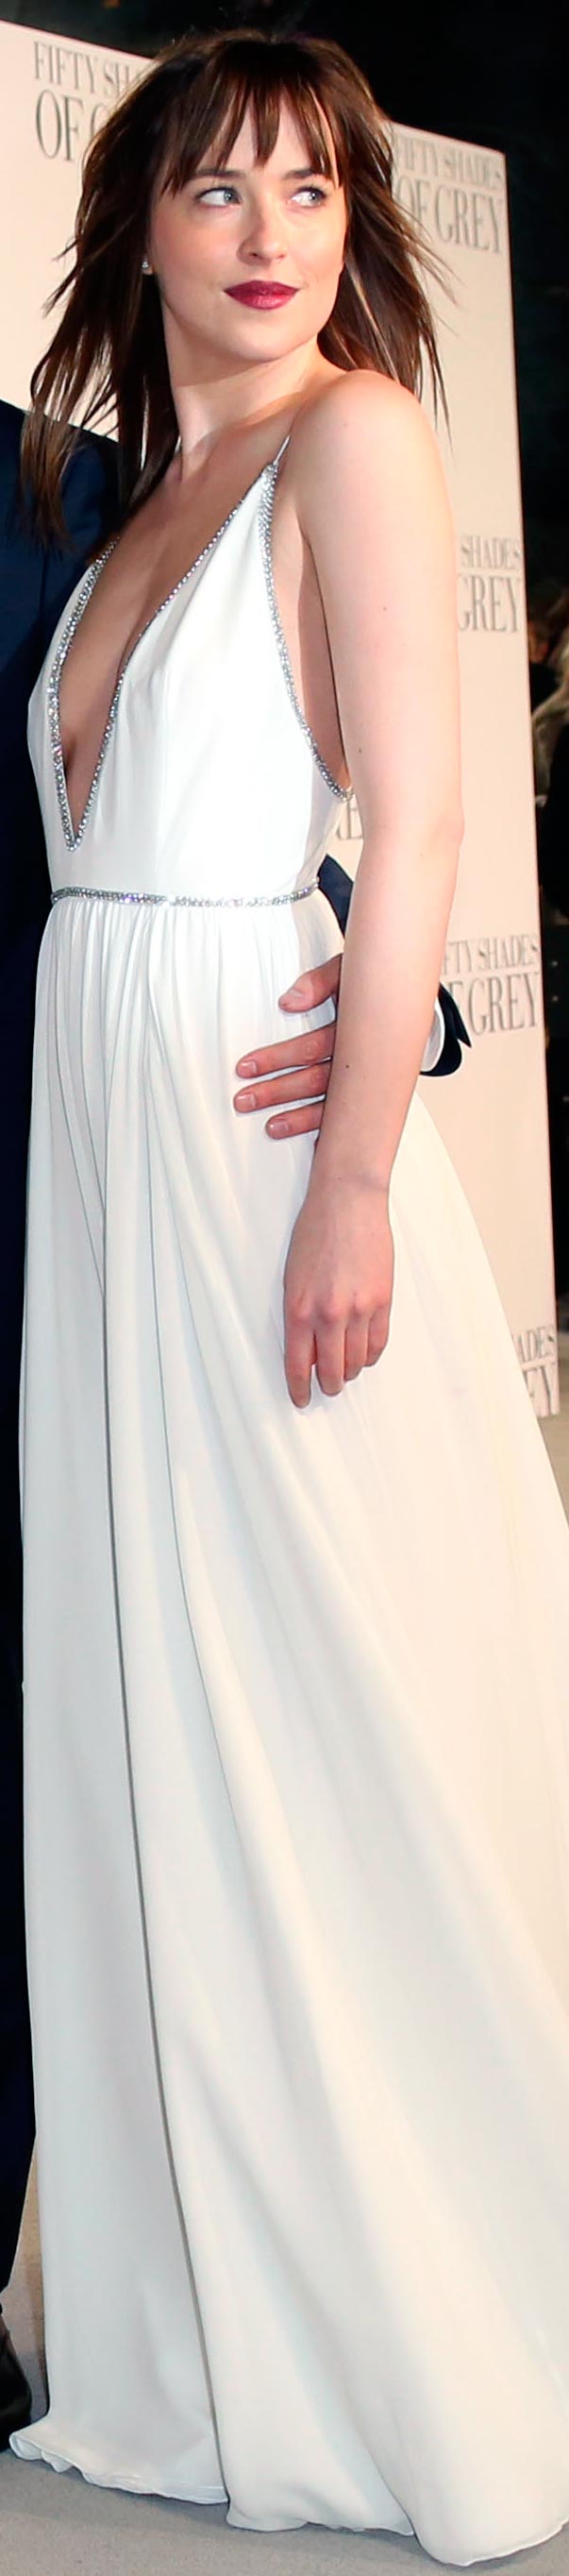 Dakota Johnson Cincuenta sombras de Grey Premiere Londres